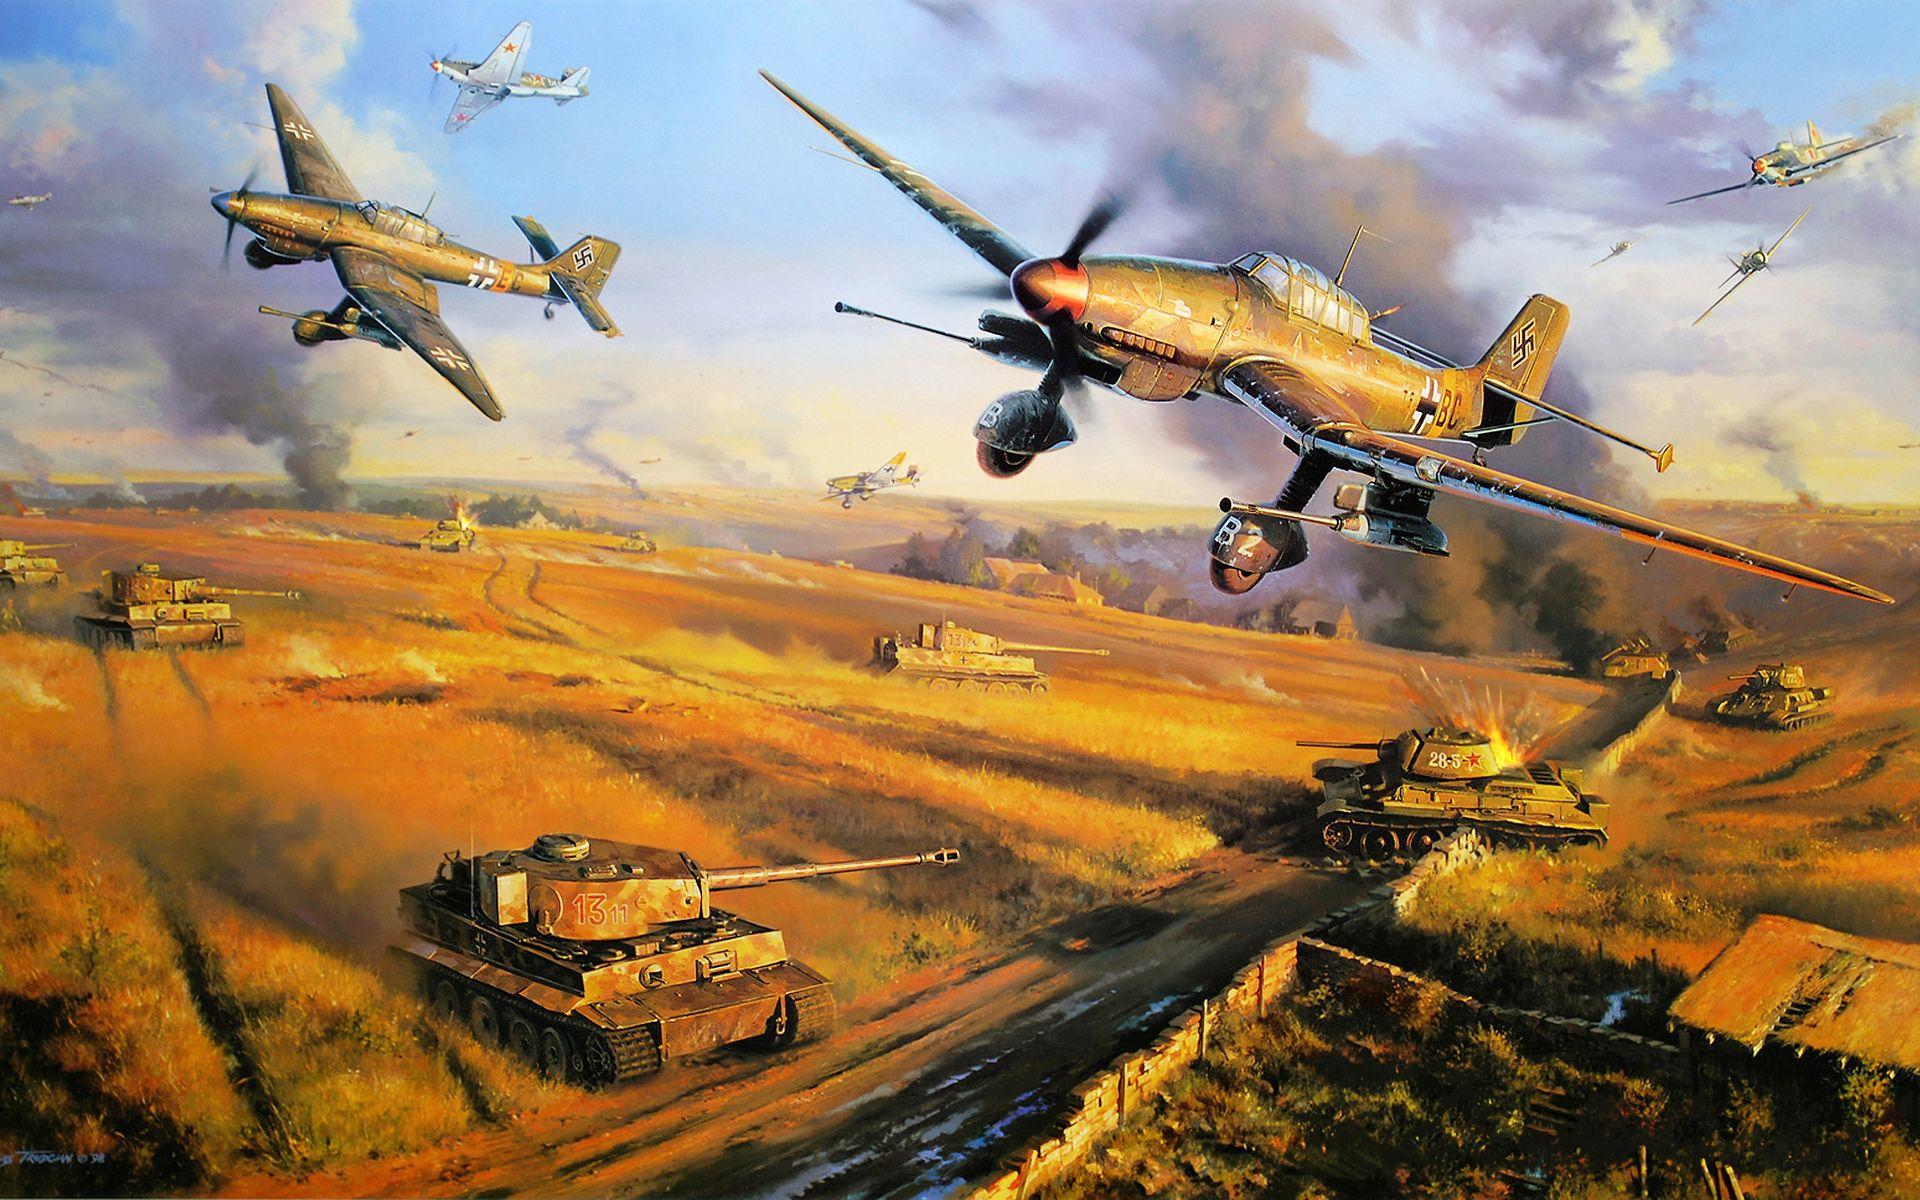 warplanes: ww2 dogfight pc download free